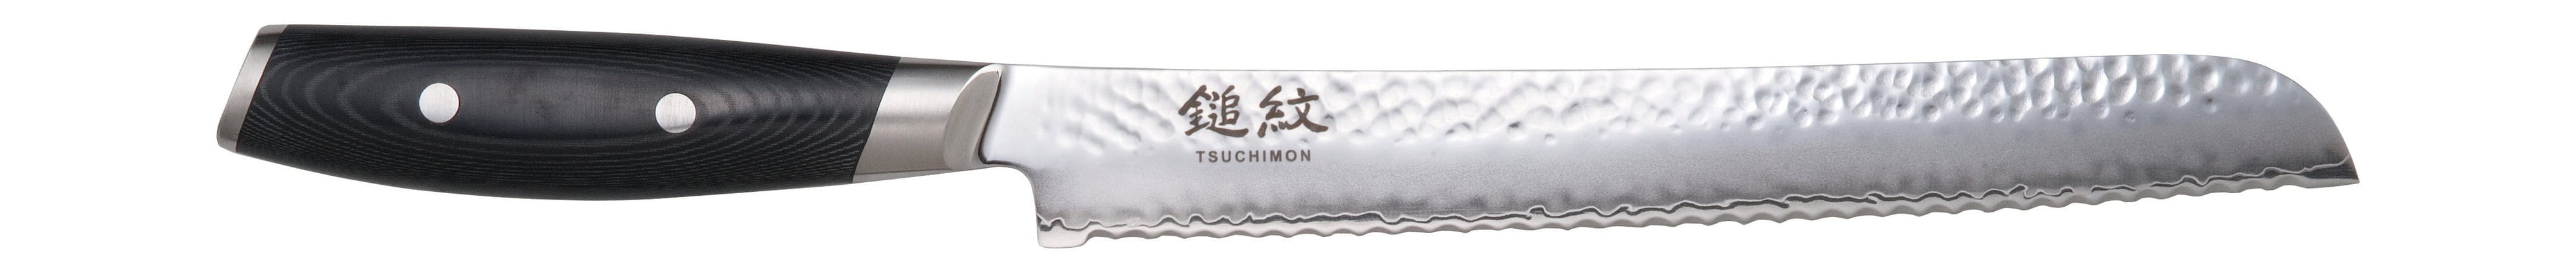 Yaxell Tsuchimon broodmes, 23 cm